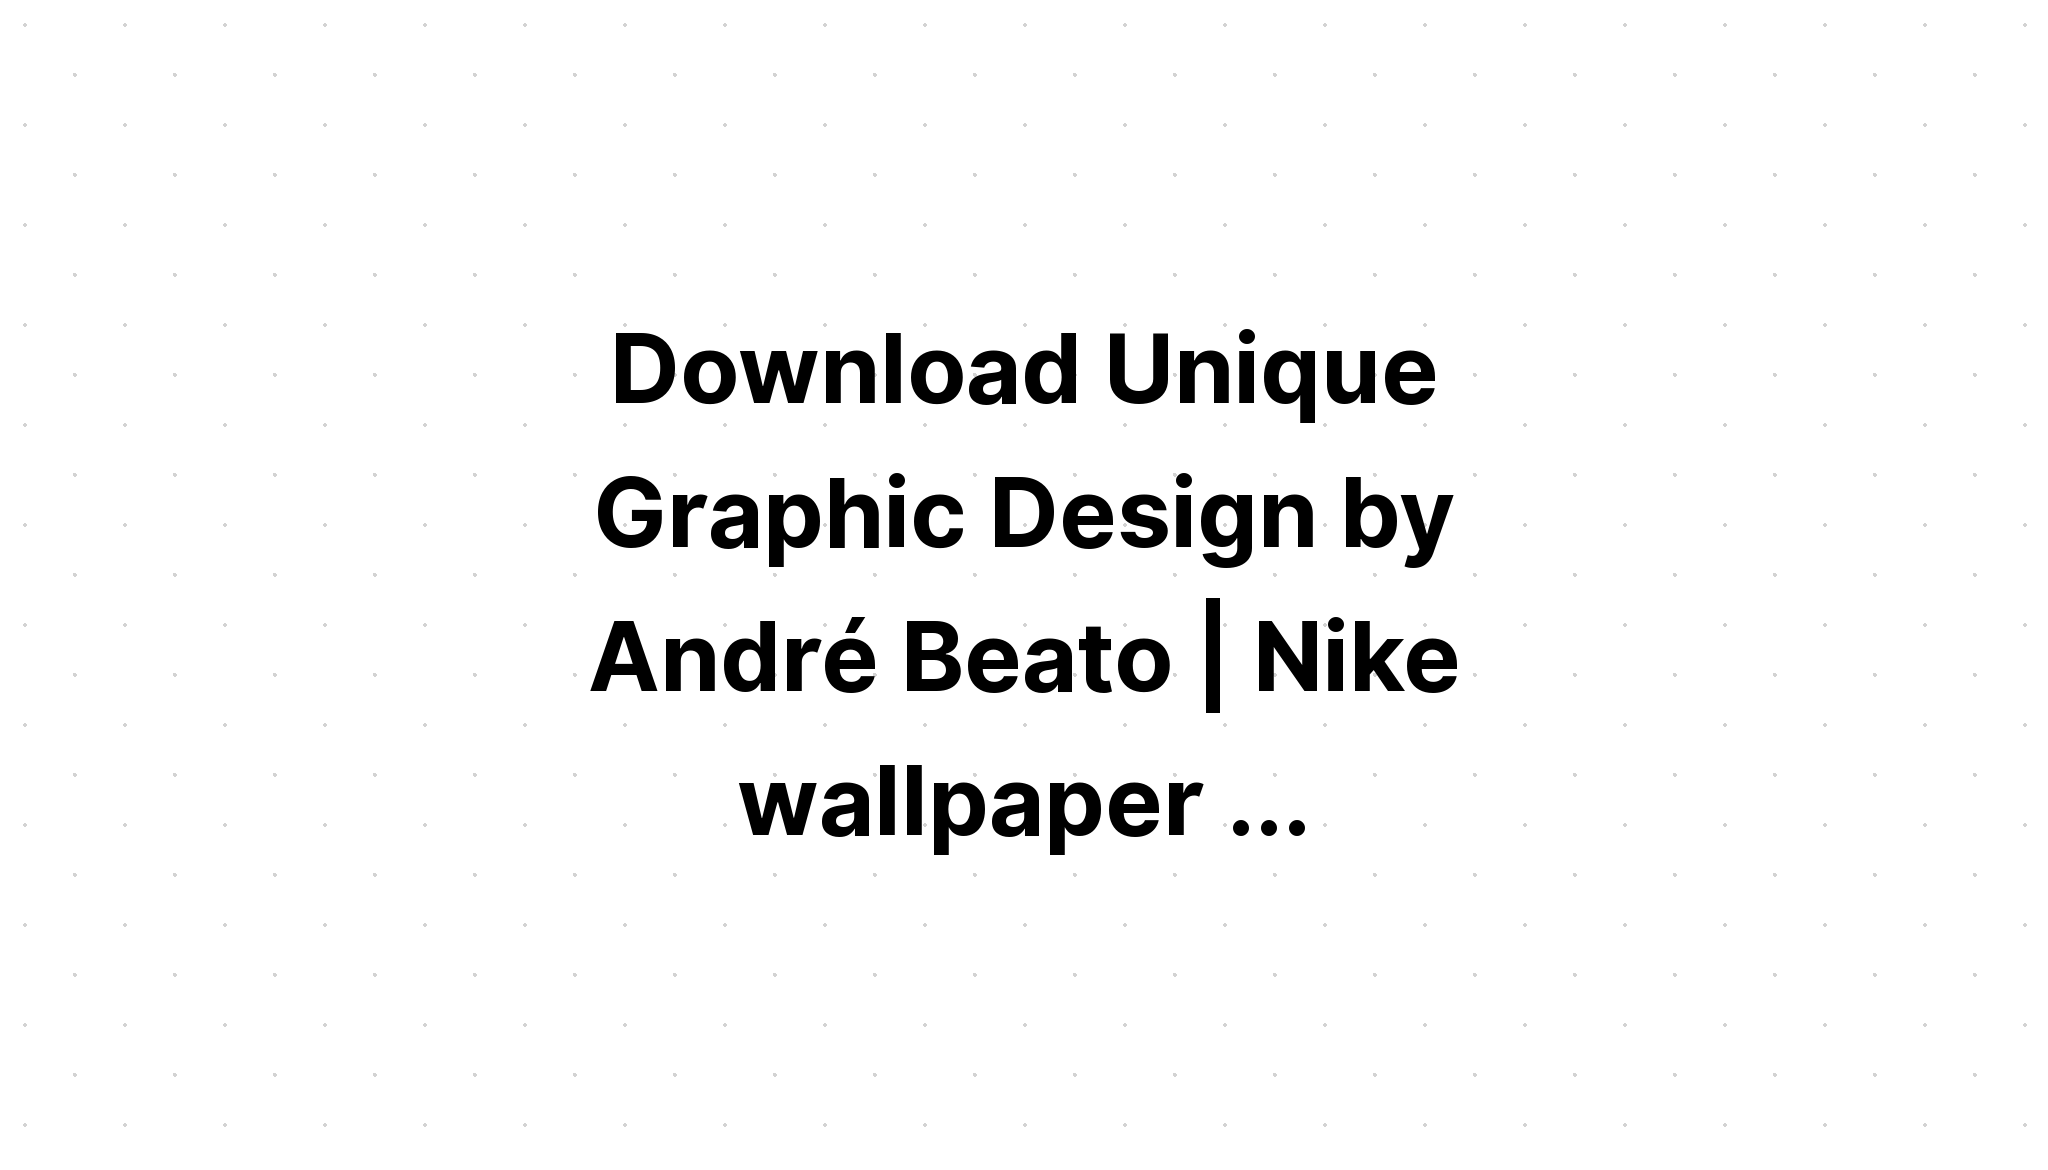 Download Nike Drip Logo Svg Free - Layered SVG Cut File